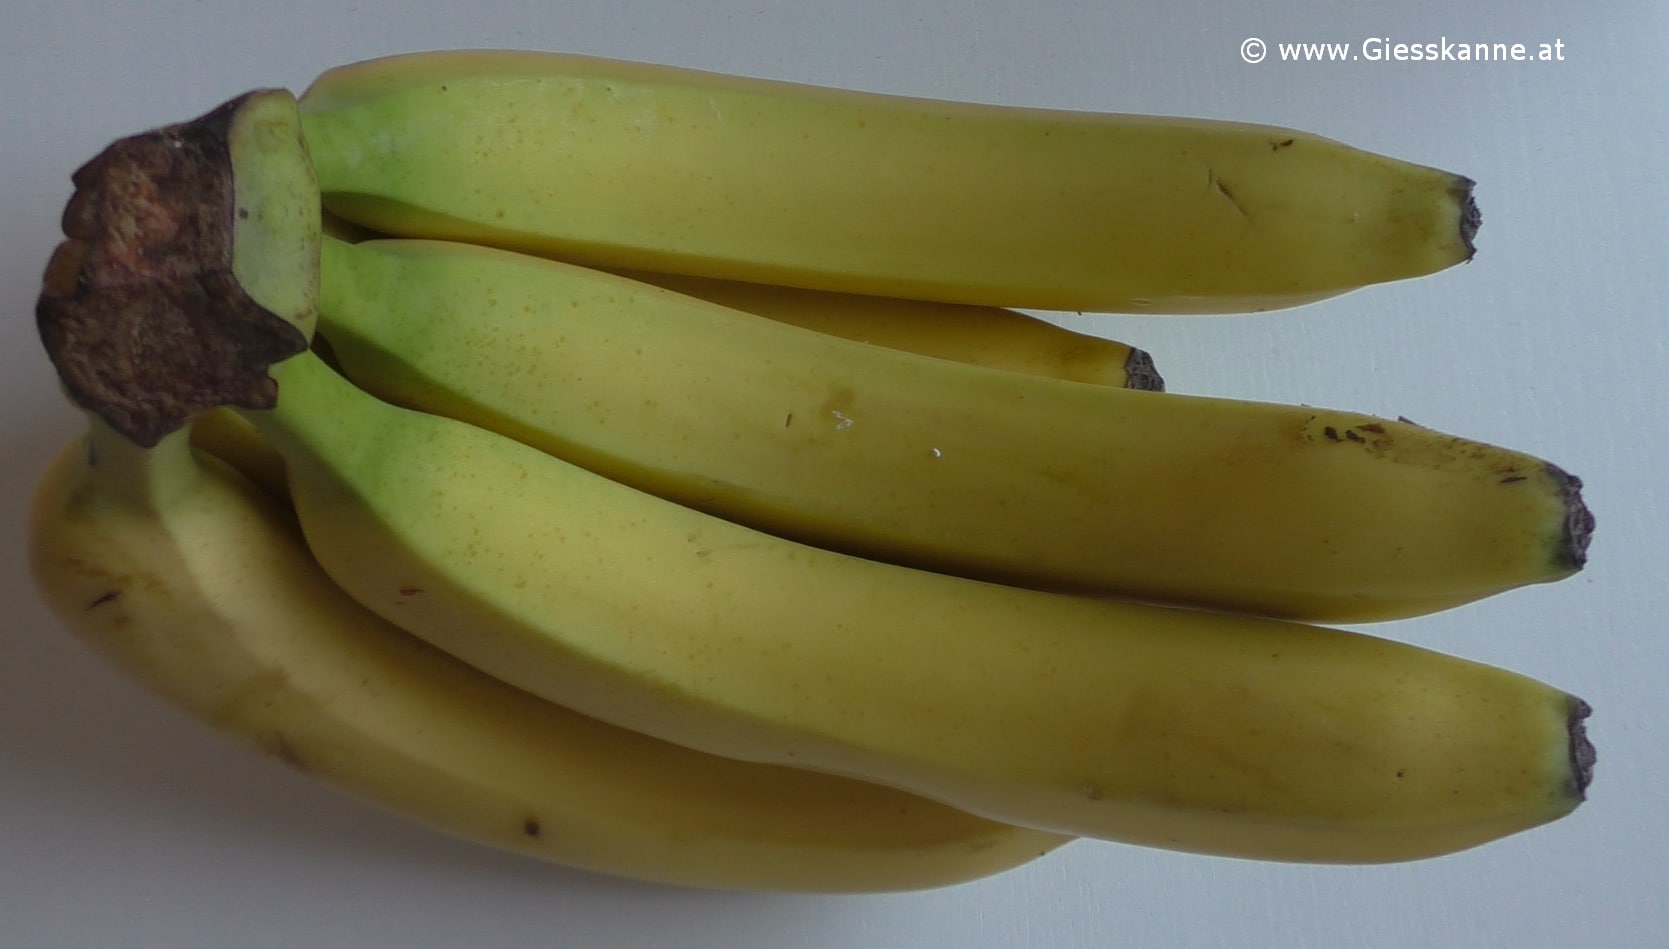 Bananen Giesskanne At